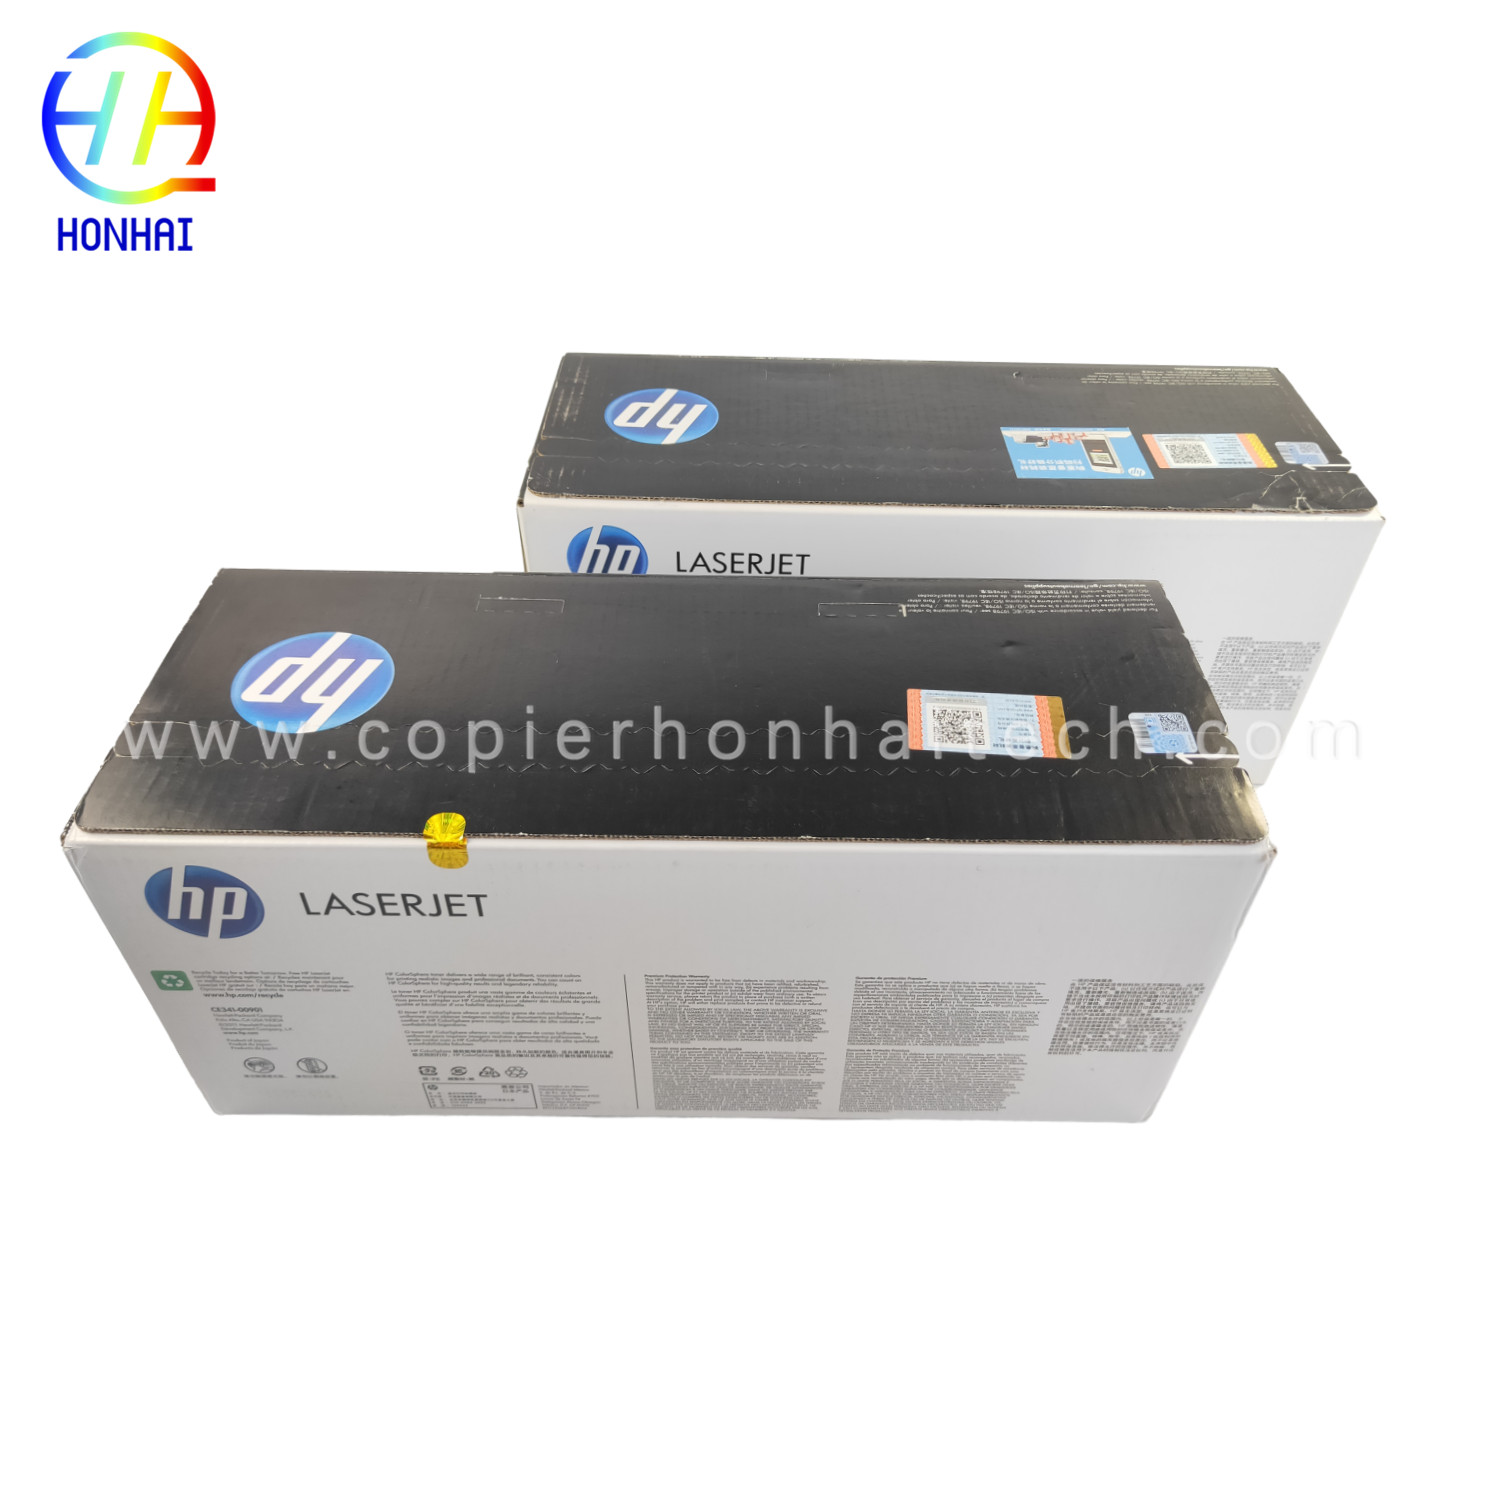 https://www.copierhonhaitech.com/original-toner-cartridge-for-hp-laserjet-enterprise-700-color-mfp-m775-series-651a-ce341a-cyan-ce342ac-yellow-16000-ገጽ-ምርት/